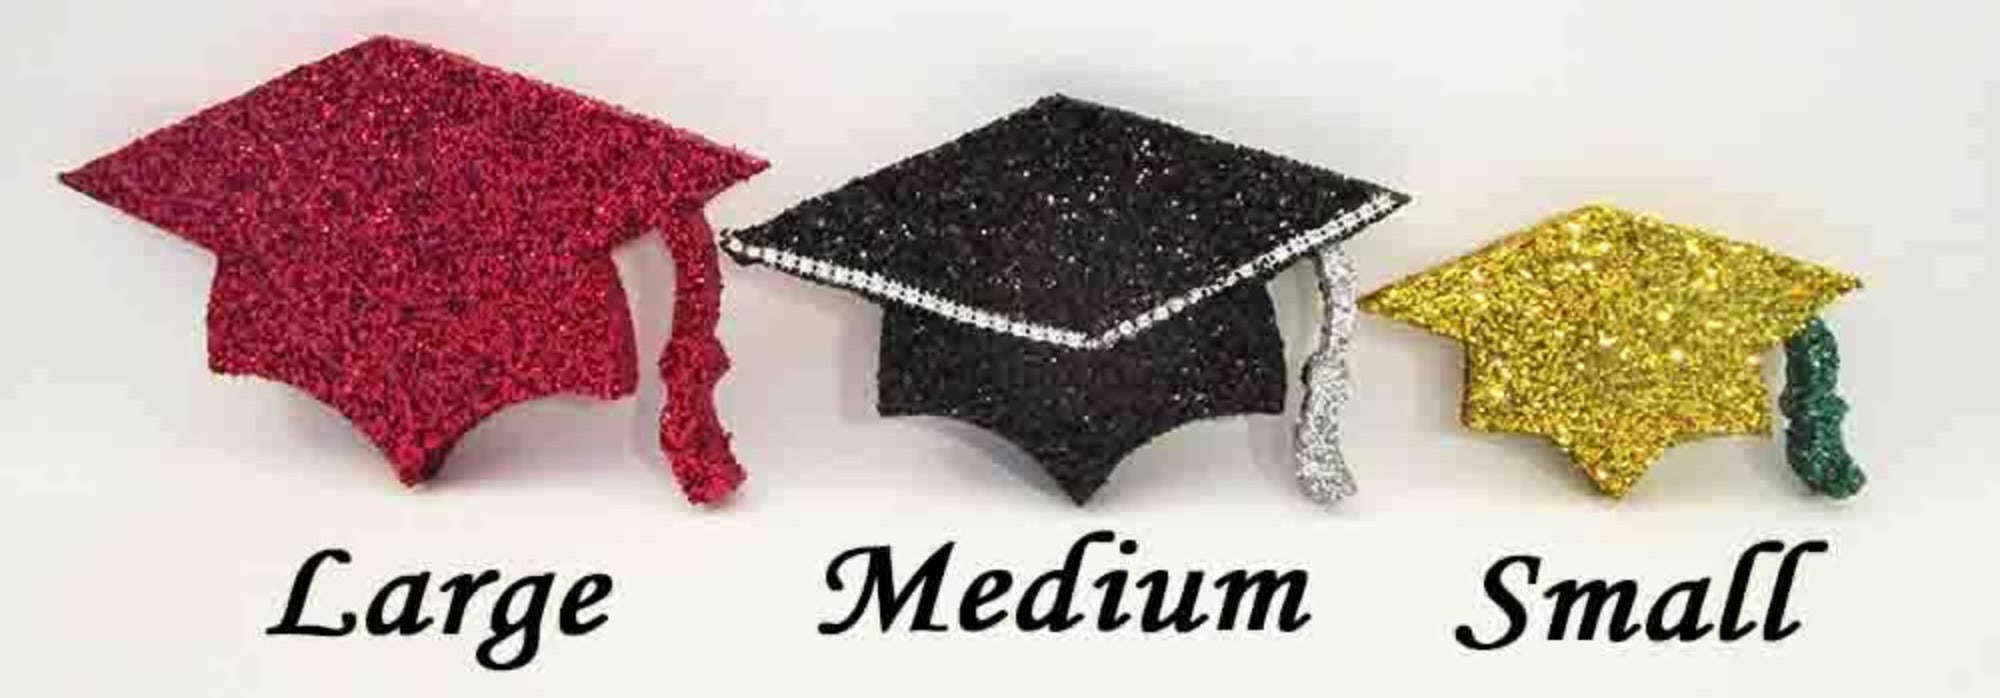 Graduation Hat - Chunky Glitter Silver - Style C - Yard Card